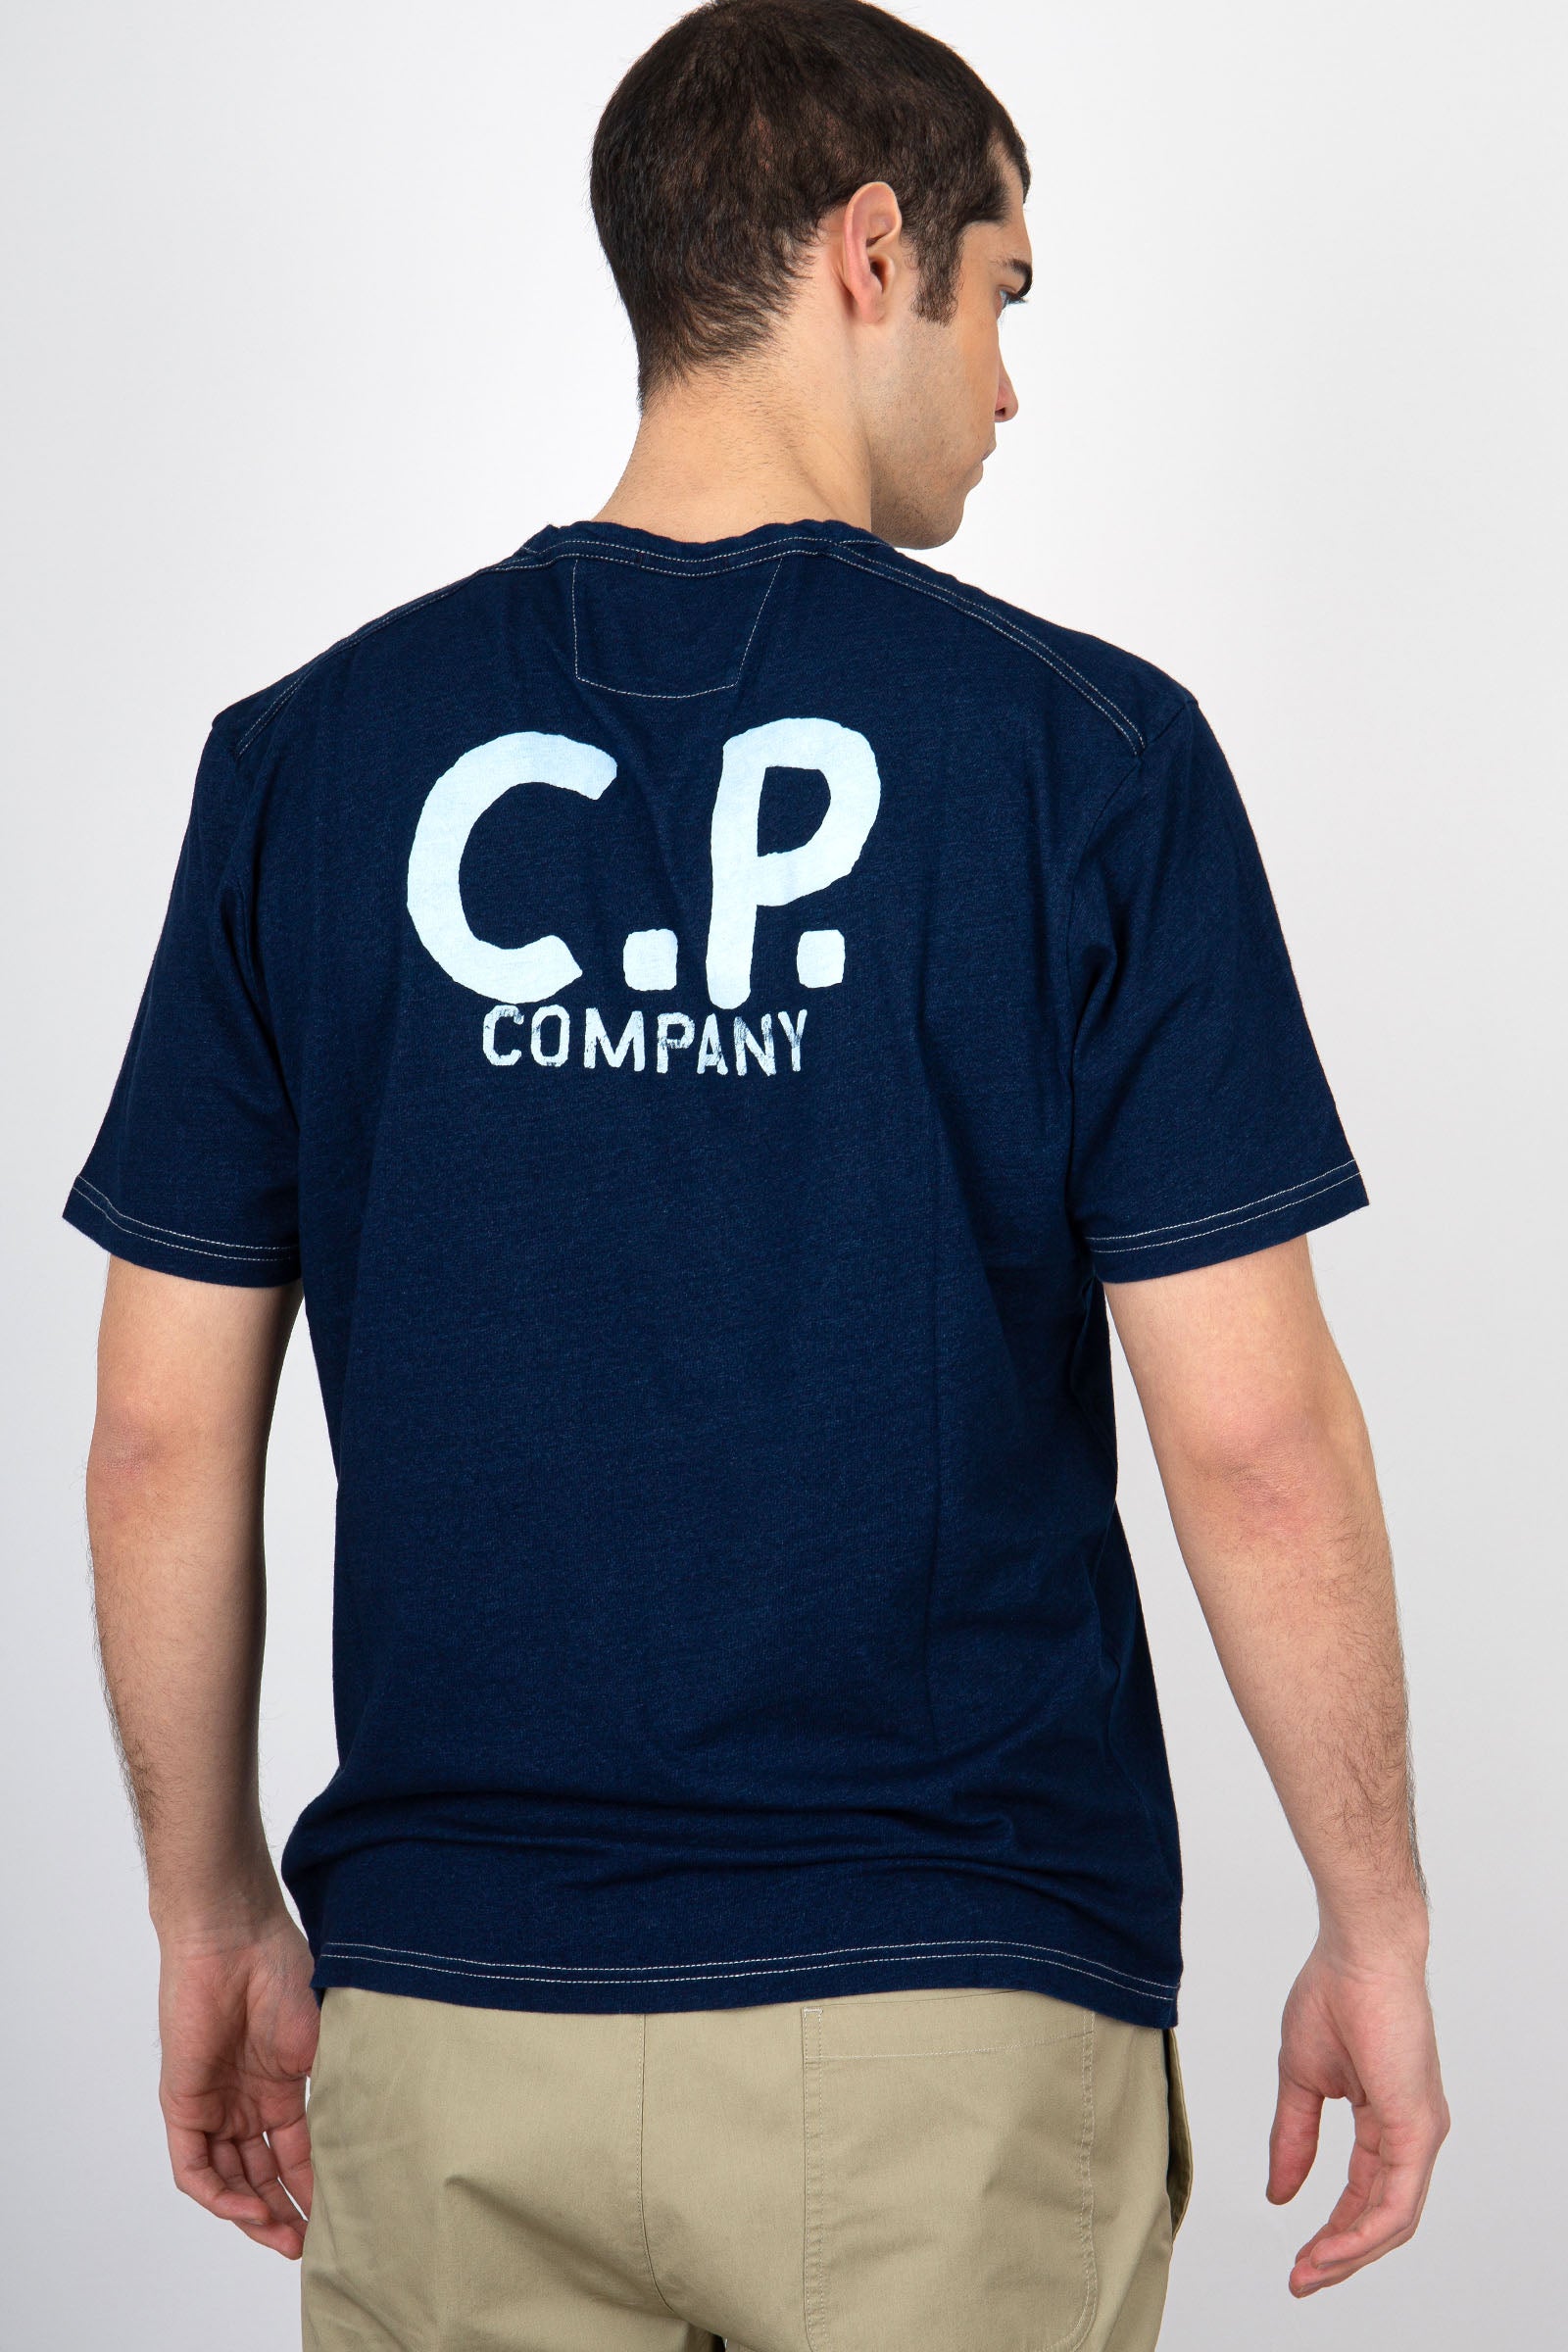 C.P. Company T-shirt Cotton Jersey Indigo - 4